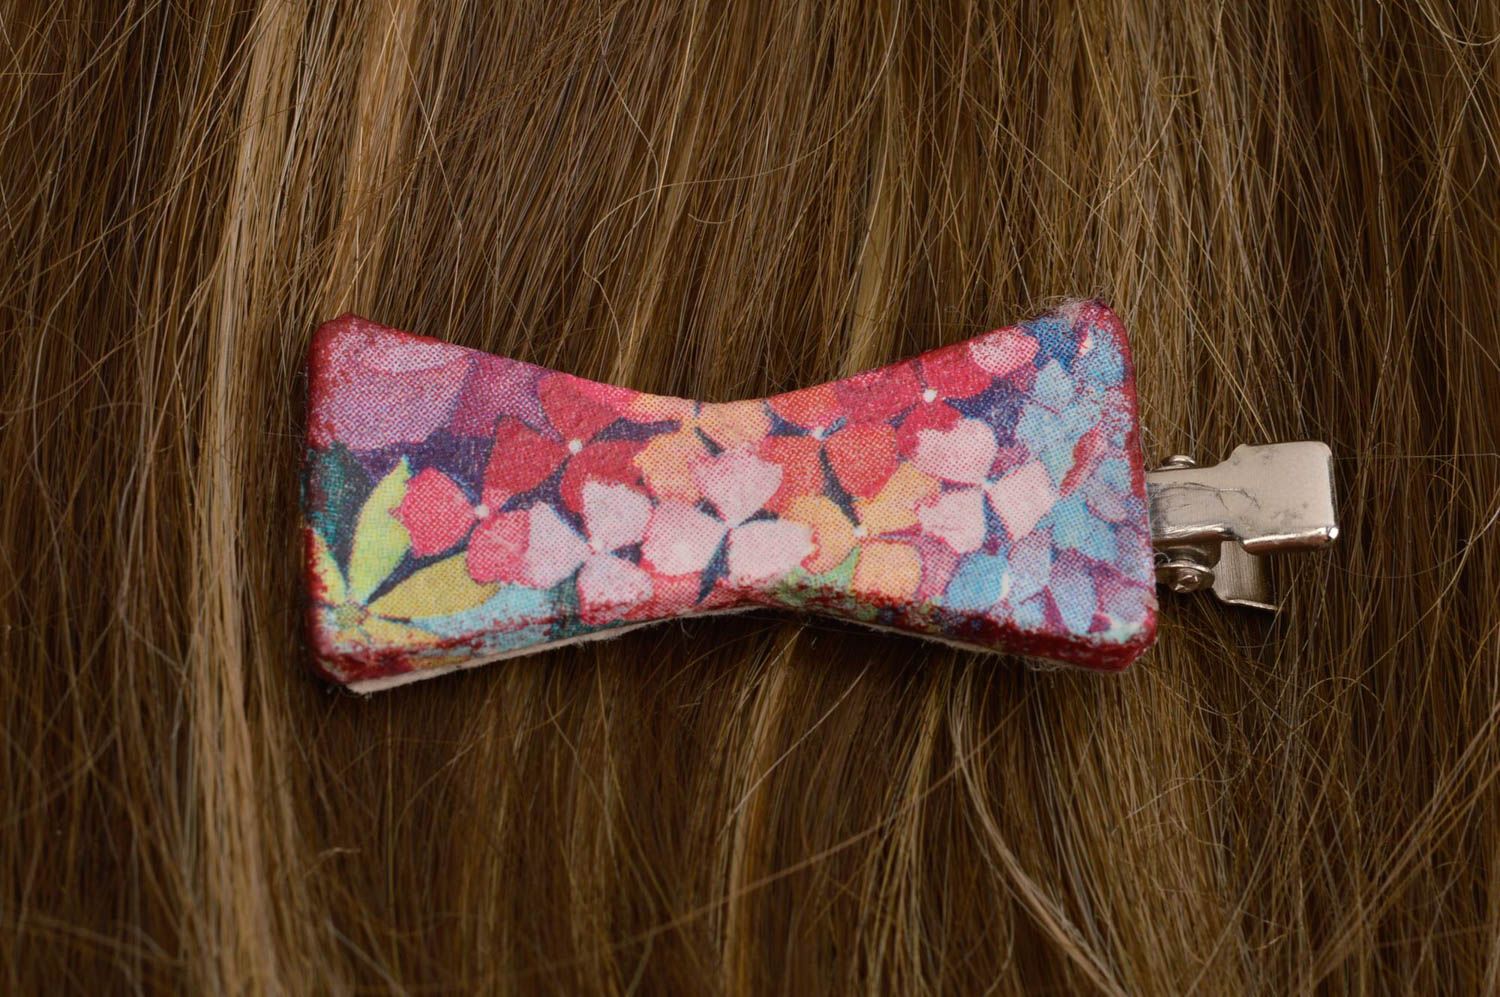 Сold porcelain hair clip hair accessory bijouterie for hair handmade gift photo 1